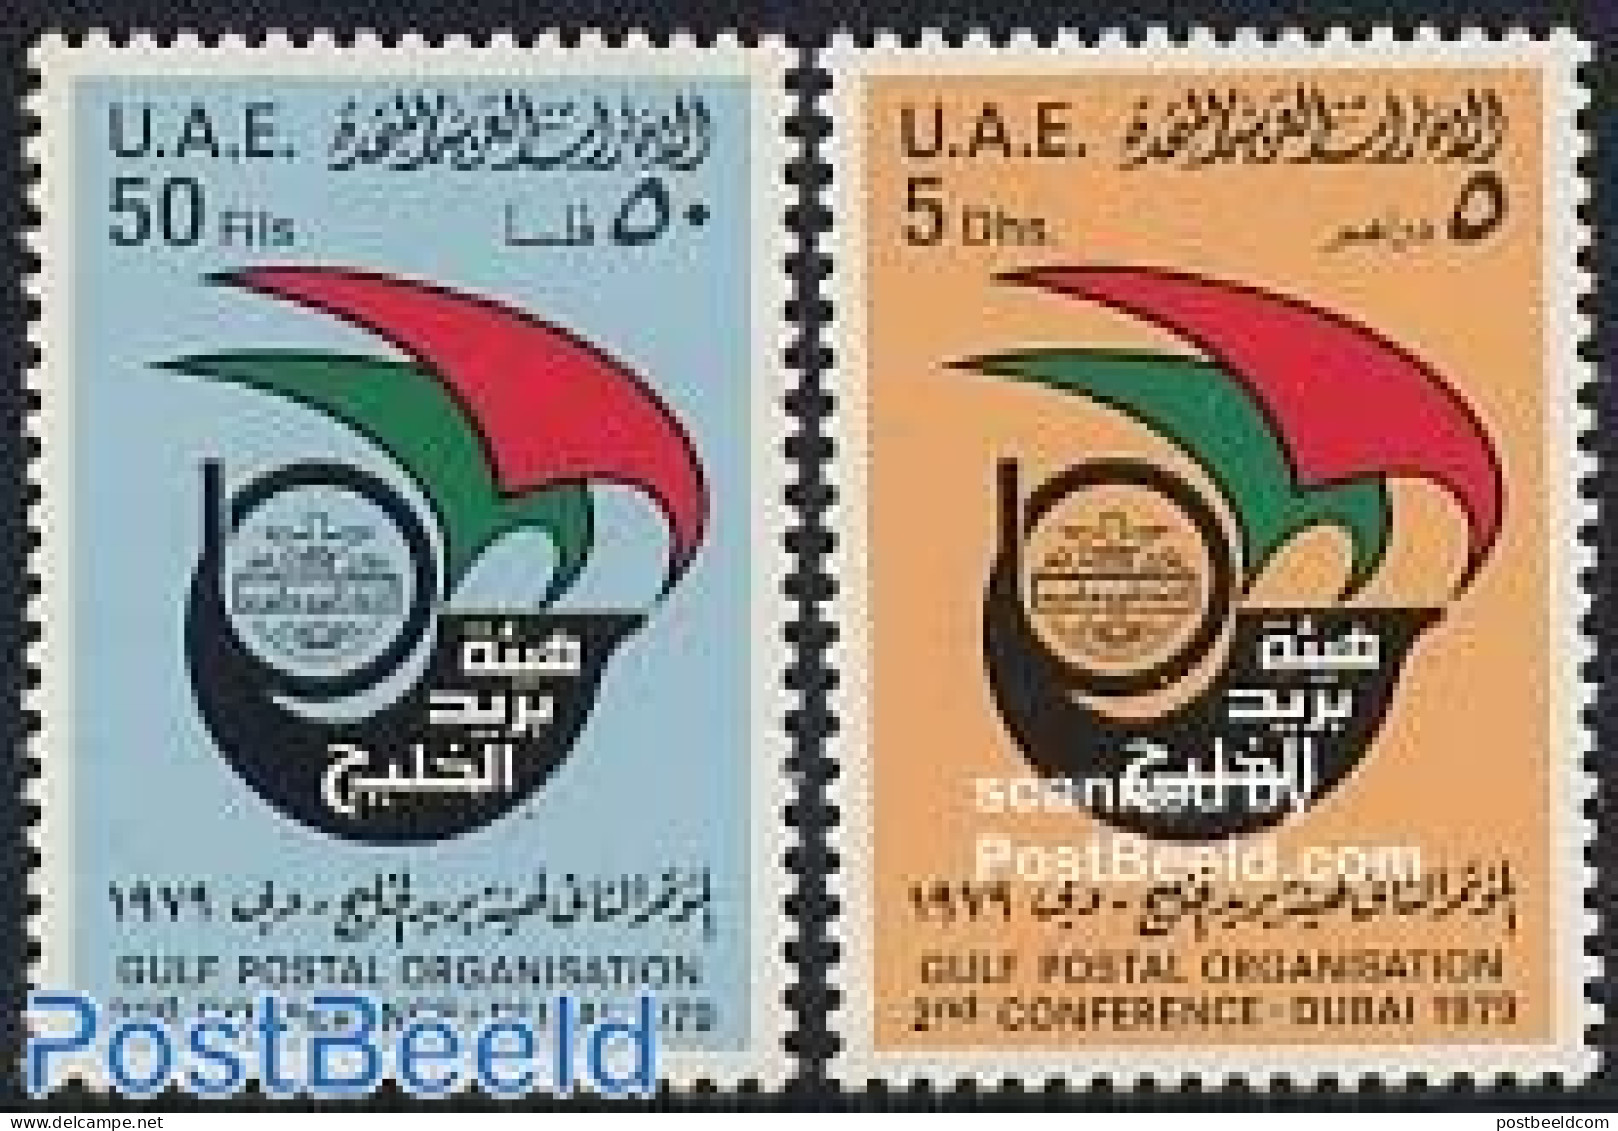 United Arab Emirates 1979 Postal Conference 2v, Mint NH, Post - Poste